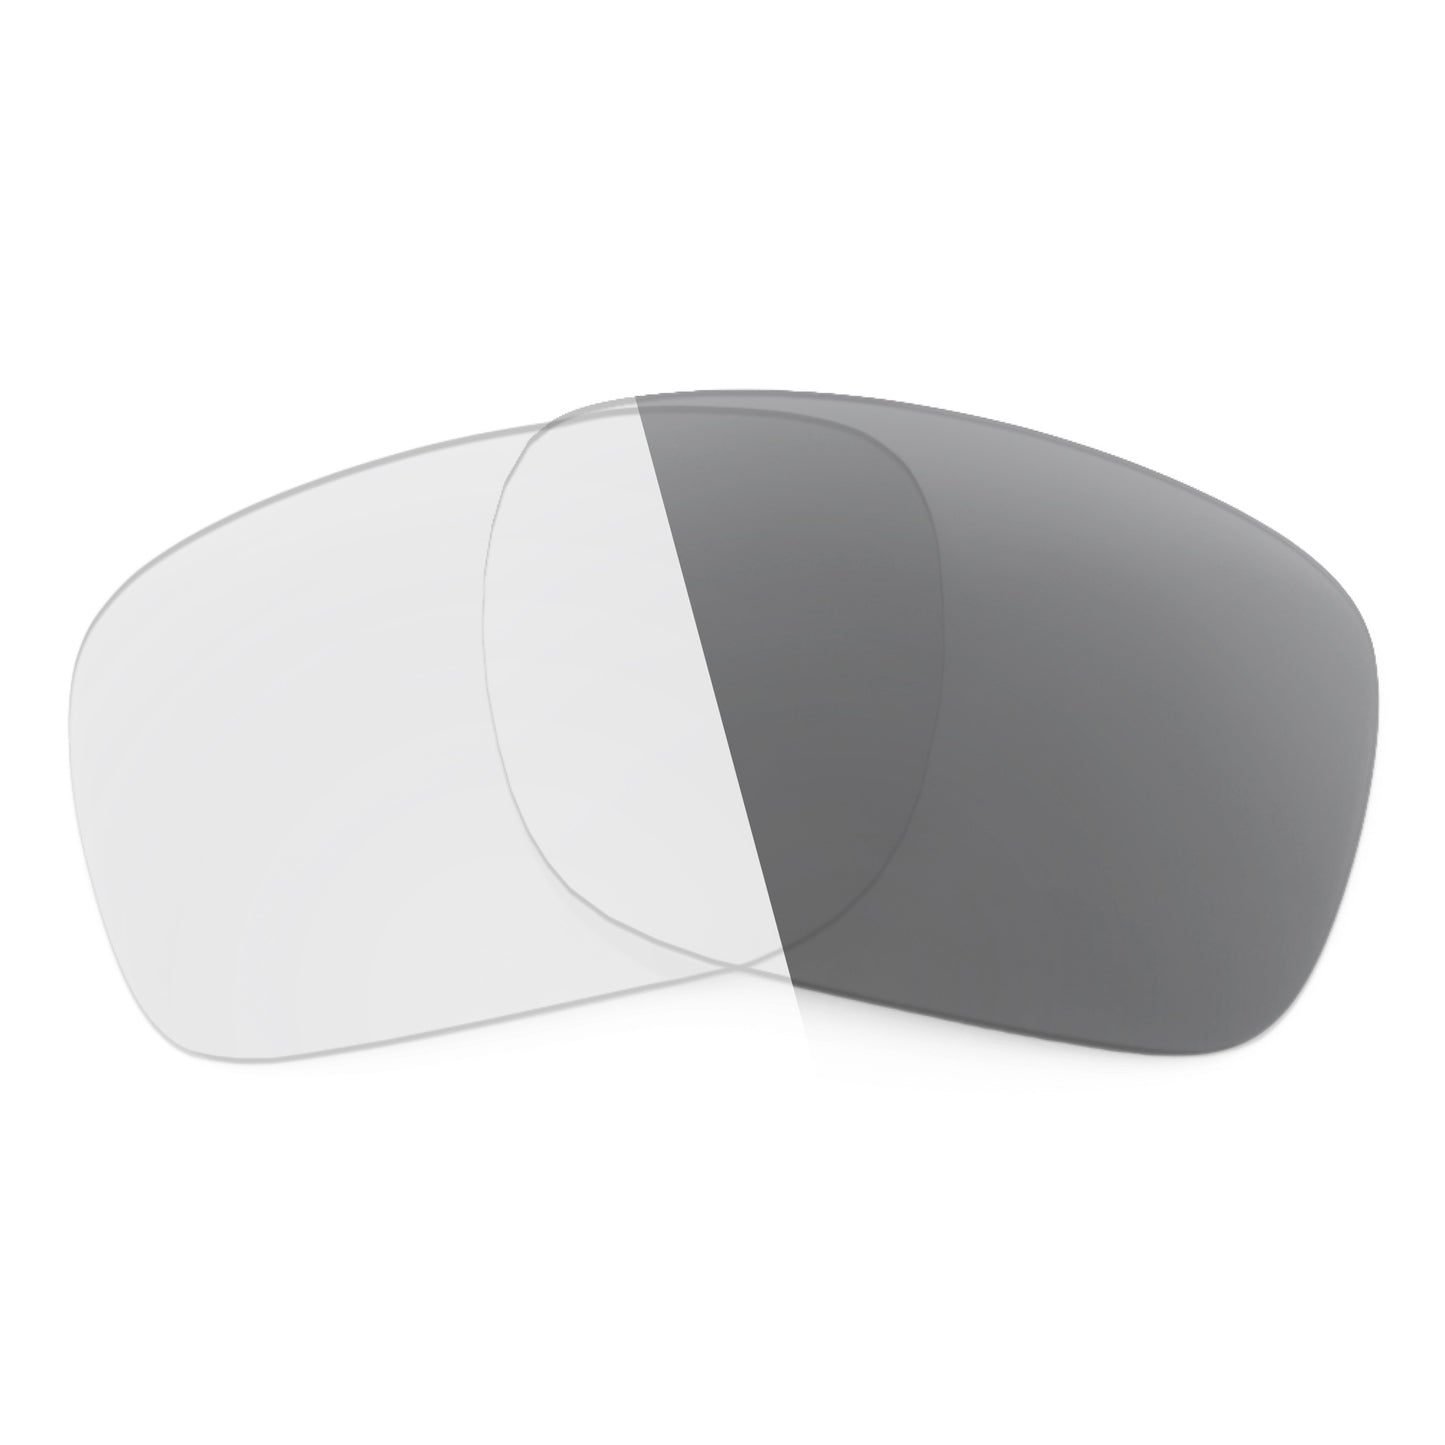 Revant replacement lenses for Oakley Sliver XL (Low Bridge Fit) Non-Polarized Adapt Gray Photochromic